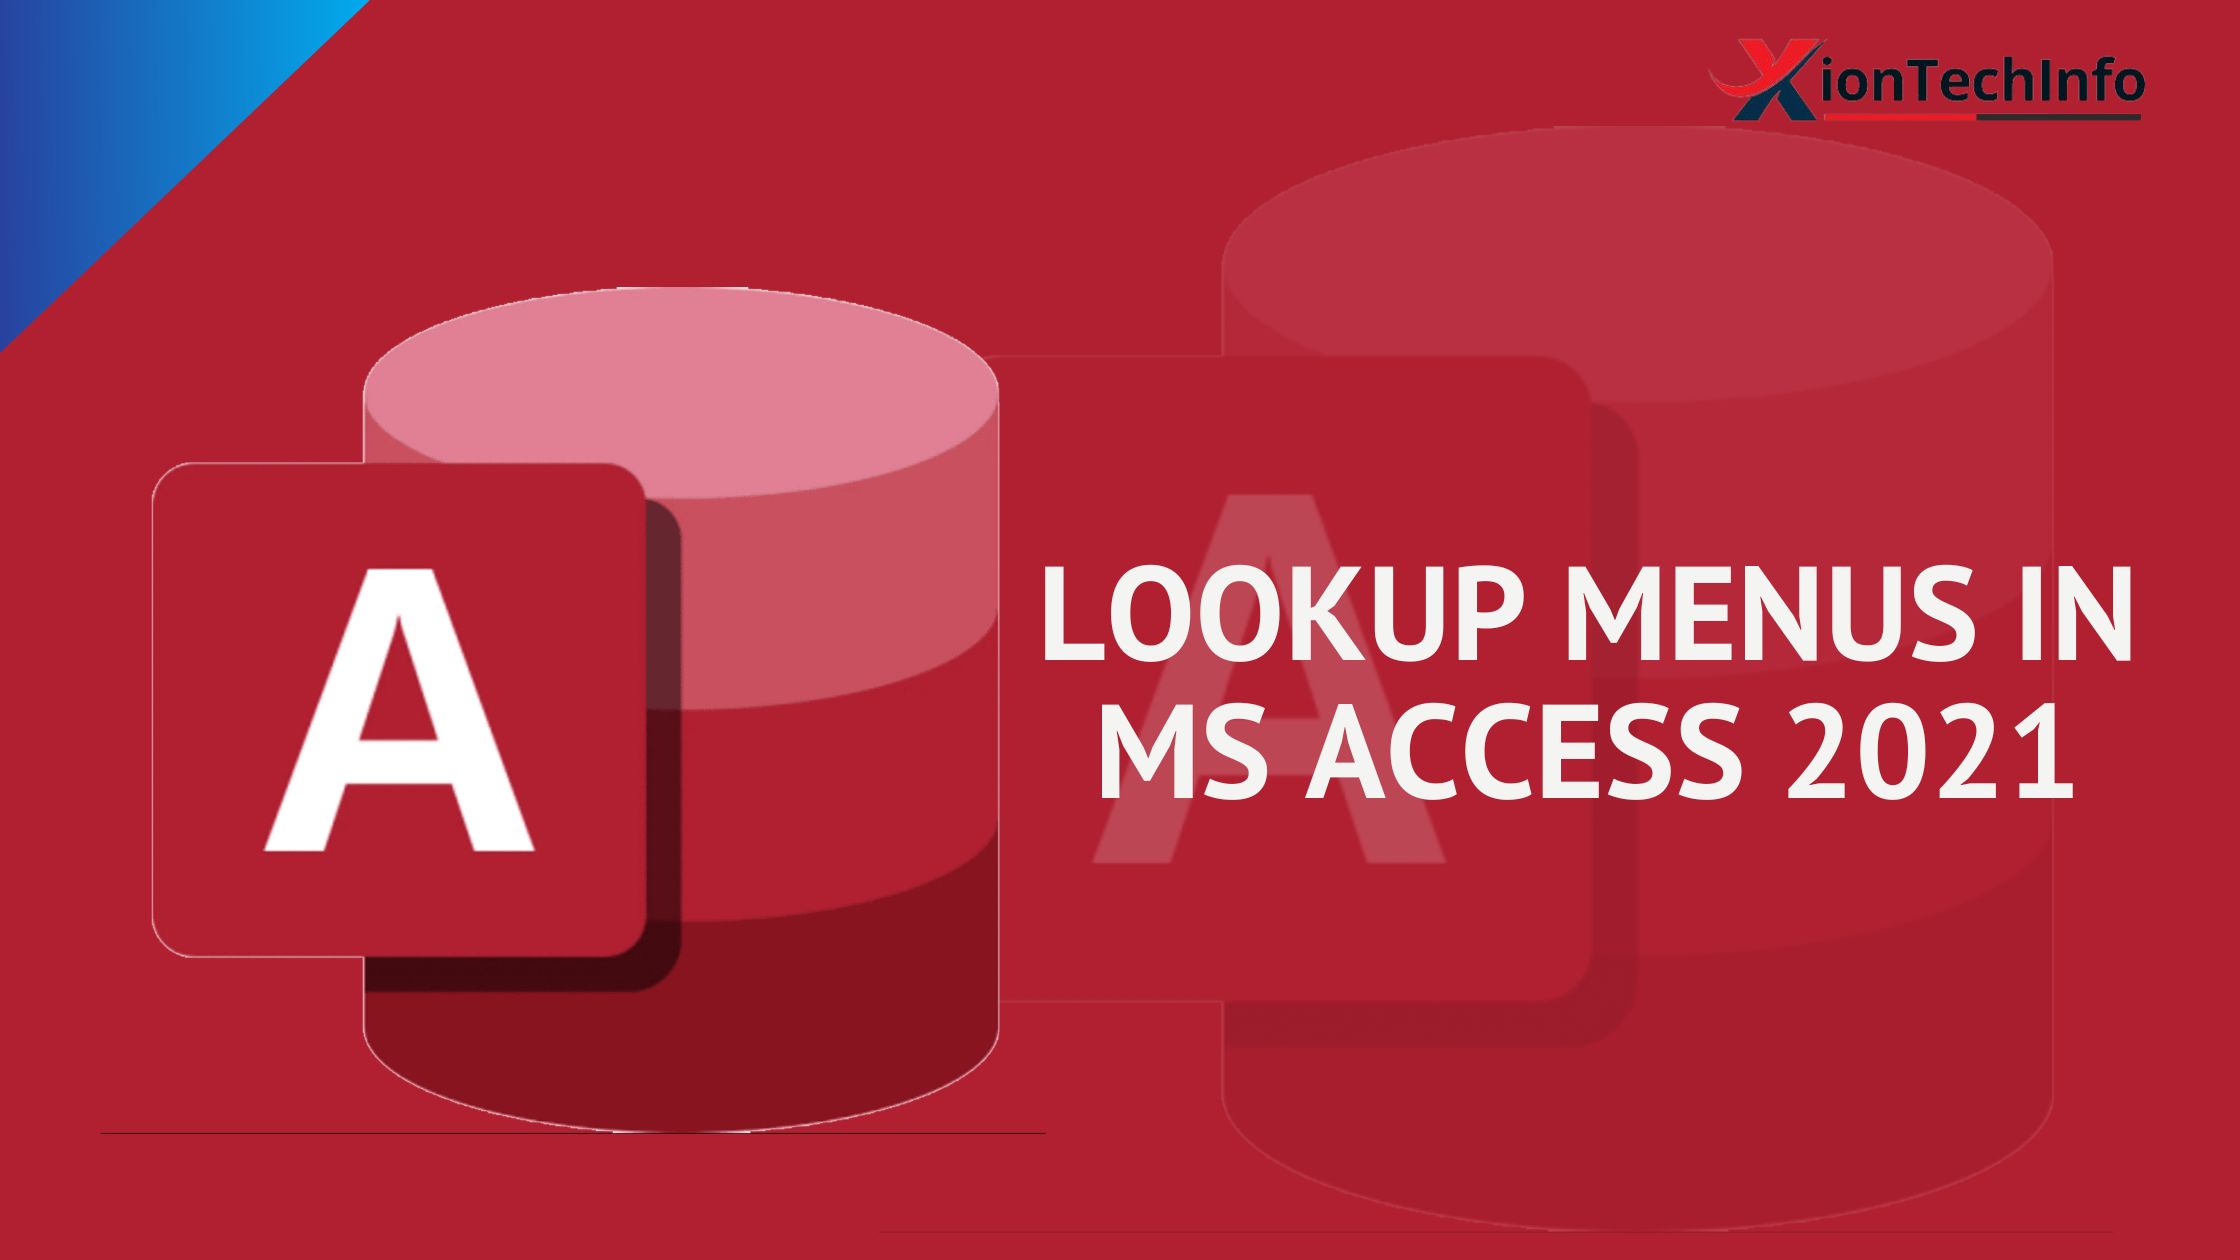 Lookup Menus in MS Access 2021